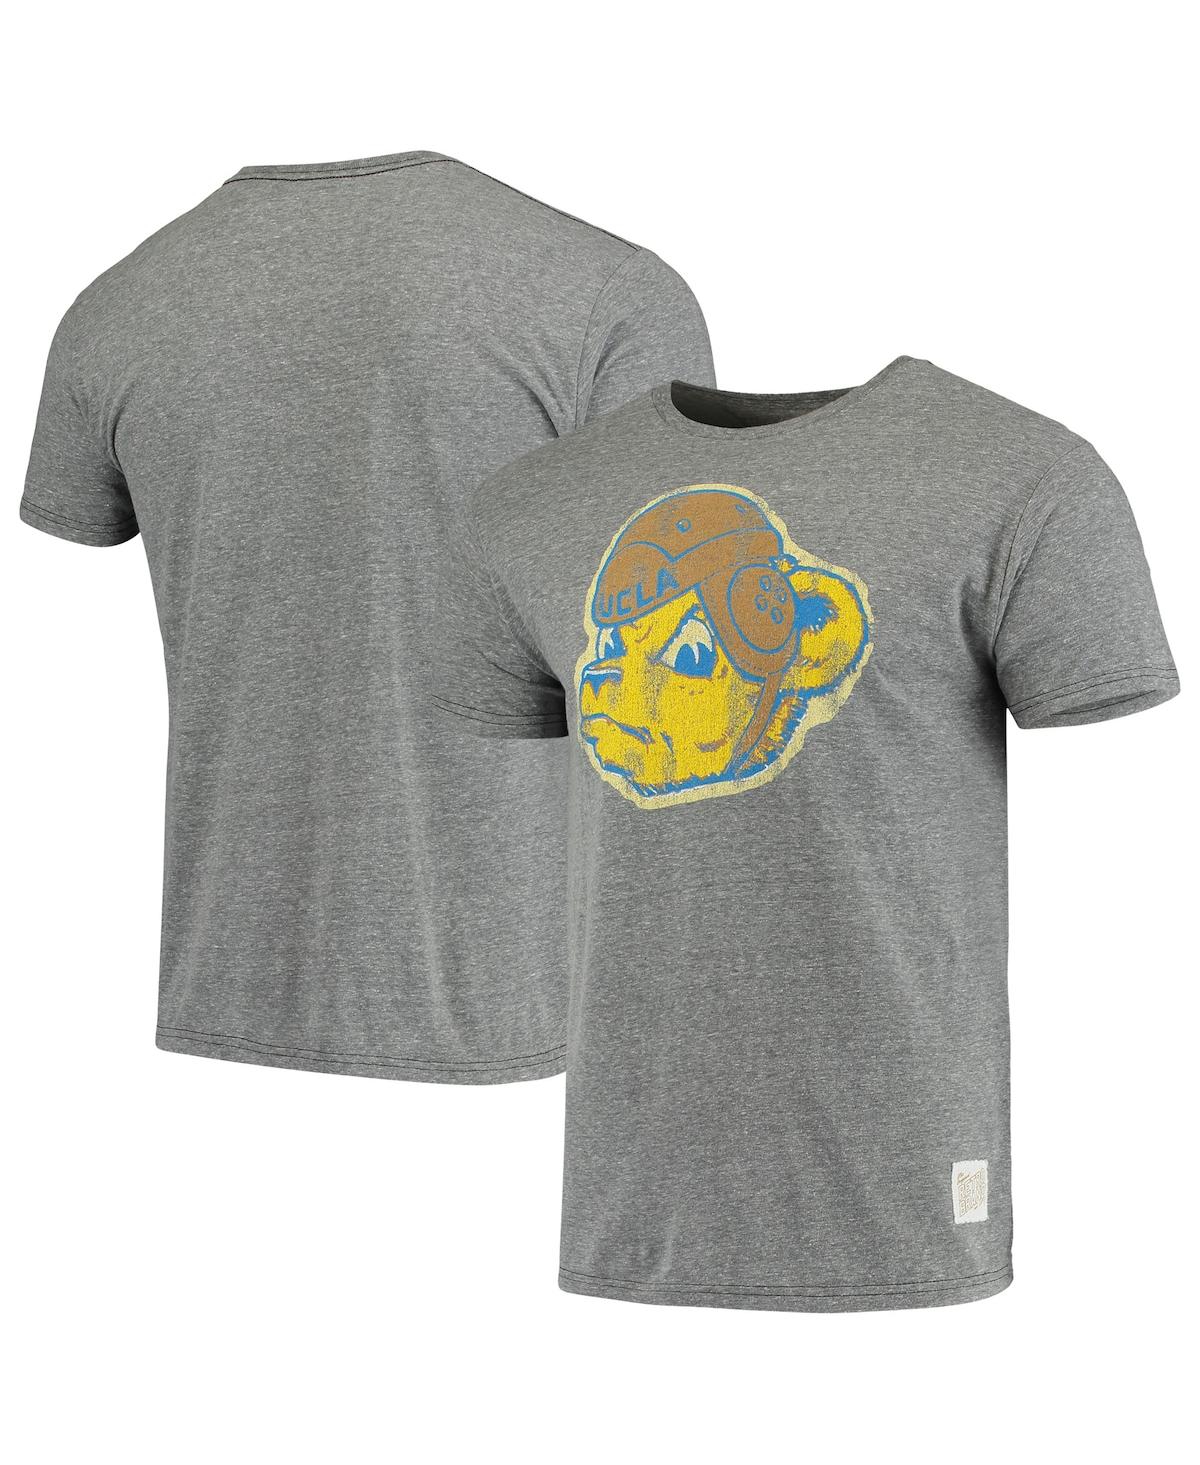 Men's Original Retro Brand Heathered Gray Ucla Bruins Vintage-Inspired Logo Tri-Blend T-shirt - Heathered Gray